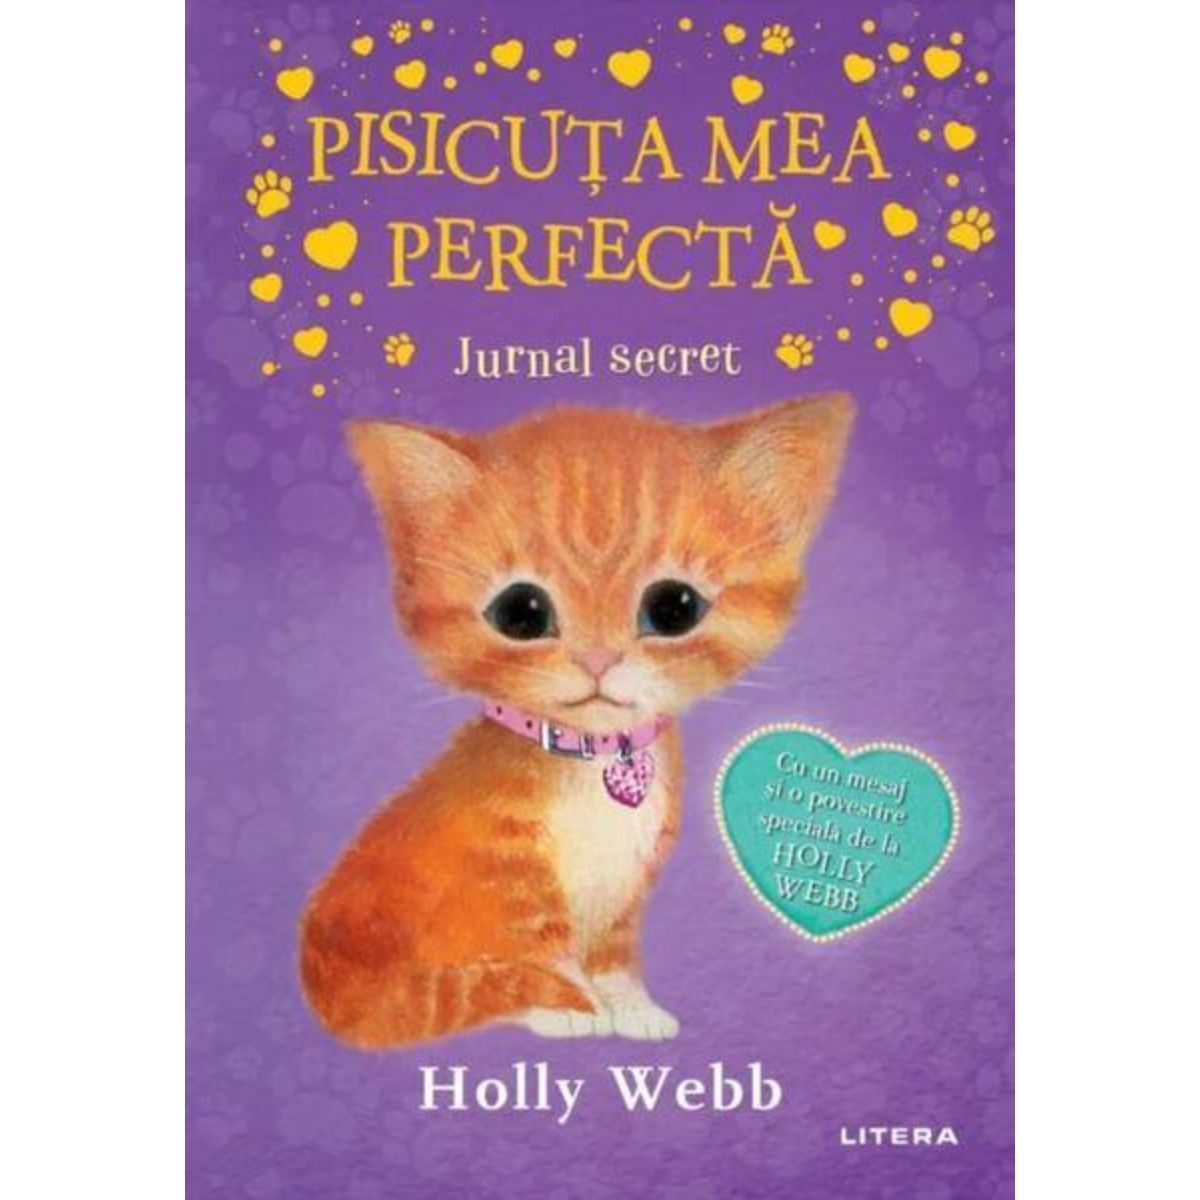 Pisicuta mea perfecta, Jurnal secret, Holly Webb